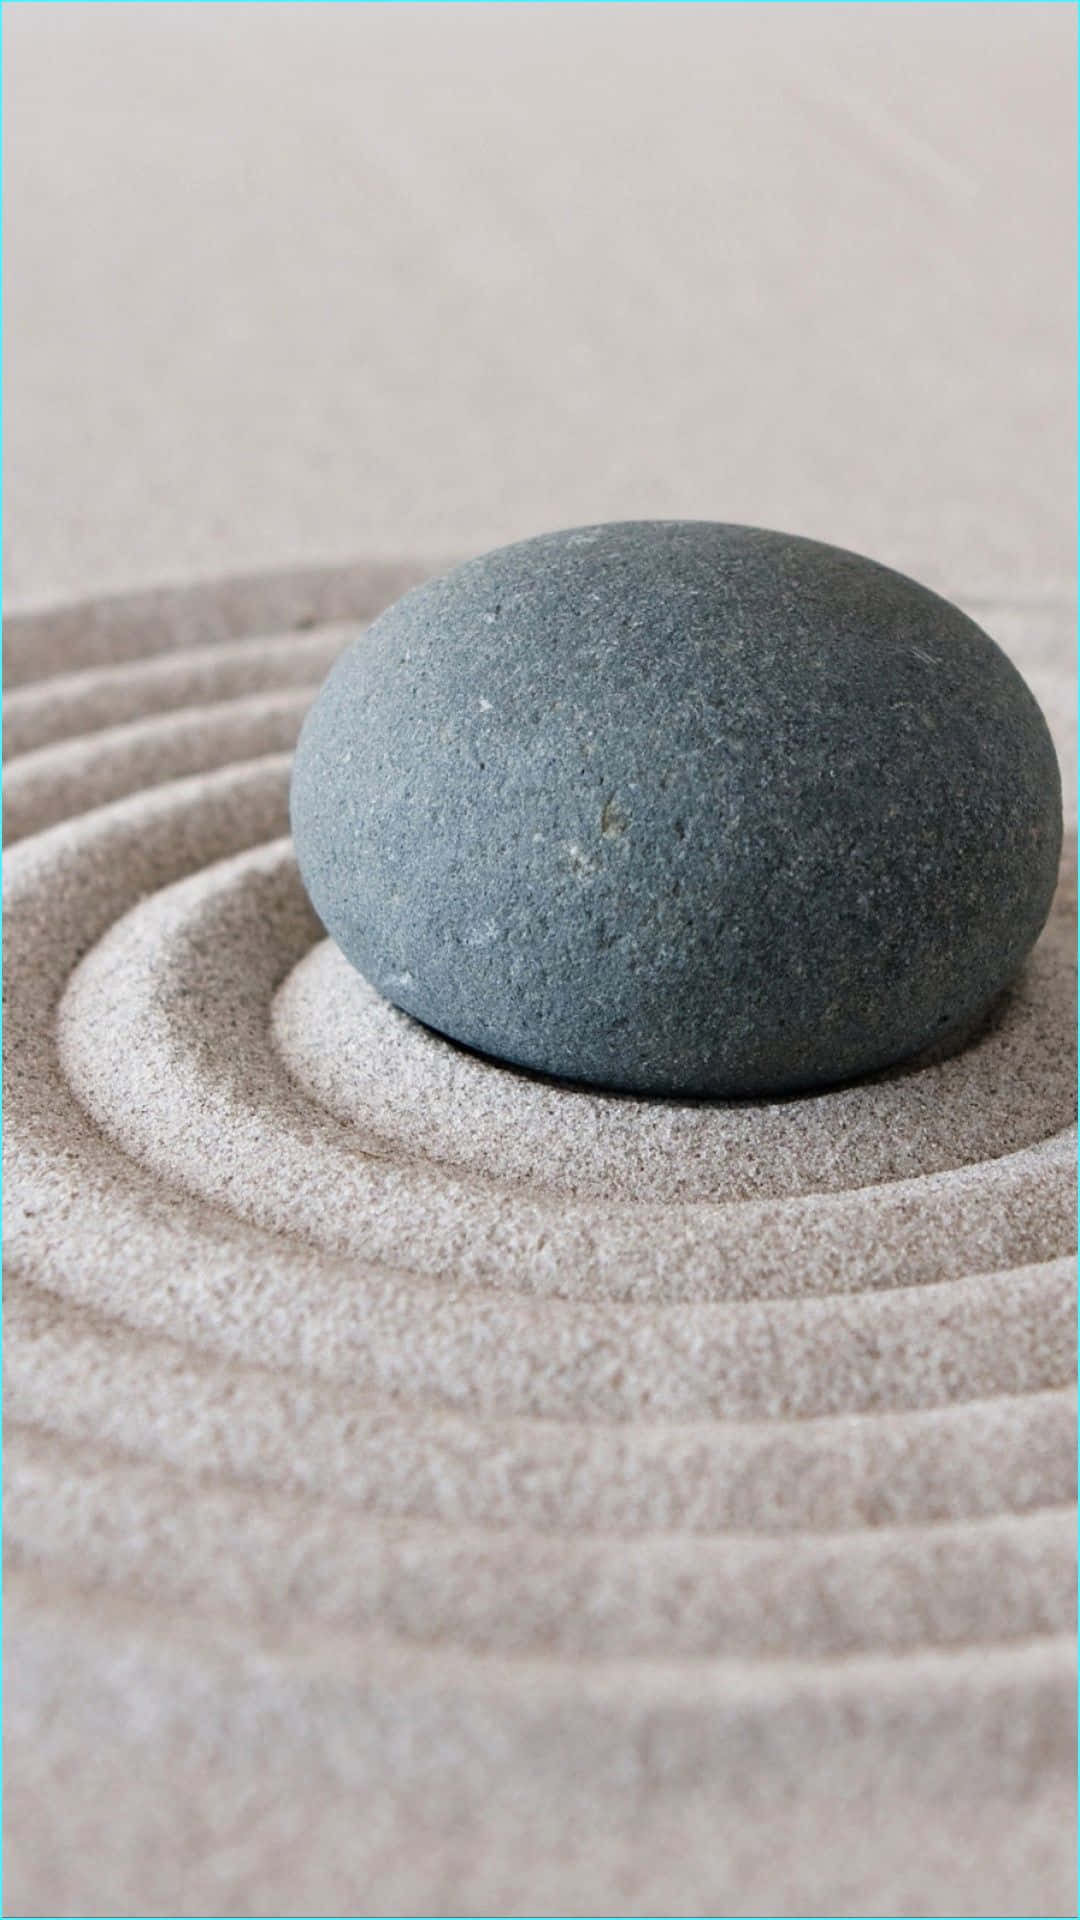 Elegant iPhone Zen Garden Stone Sand Art Wallpaper